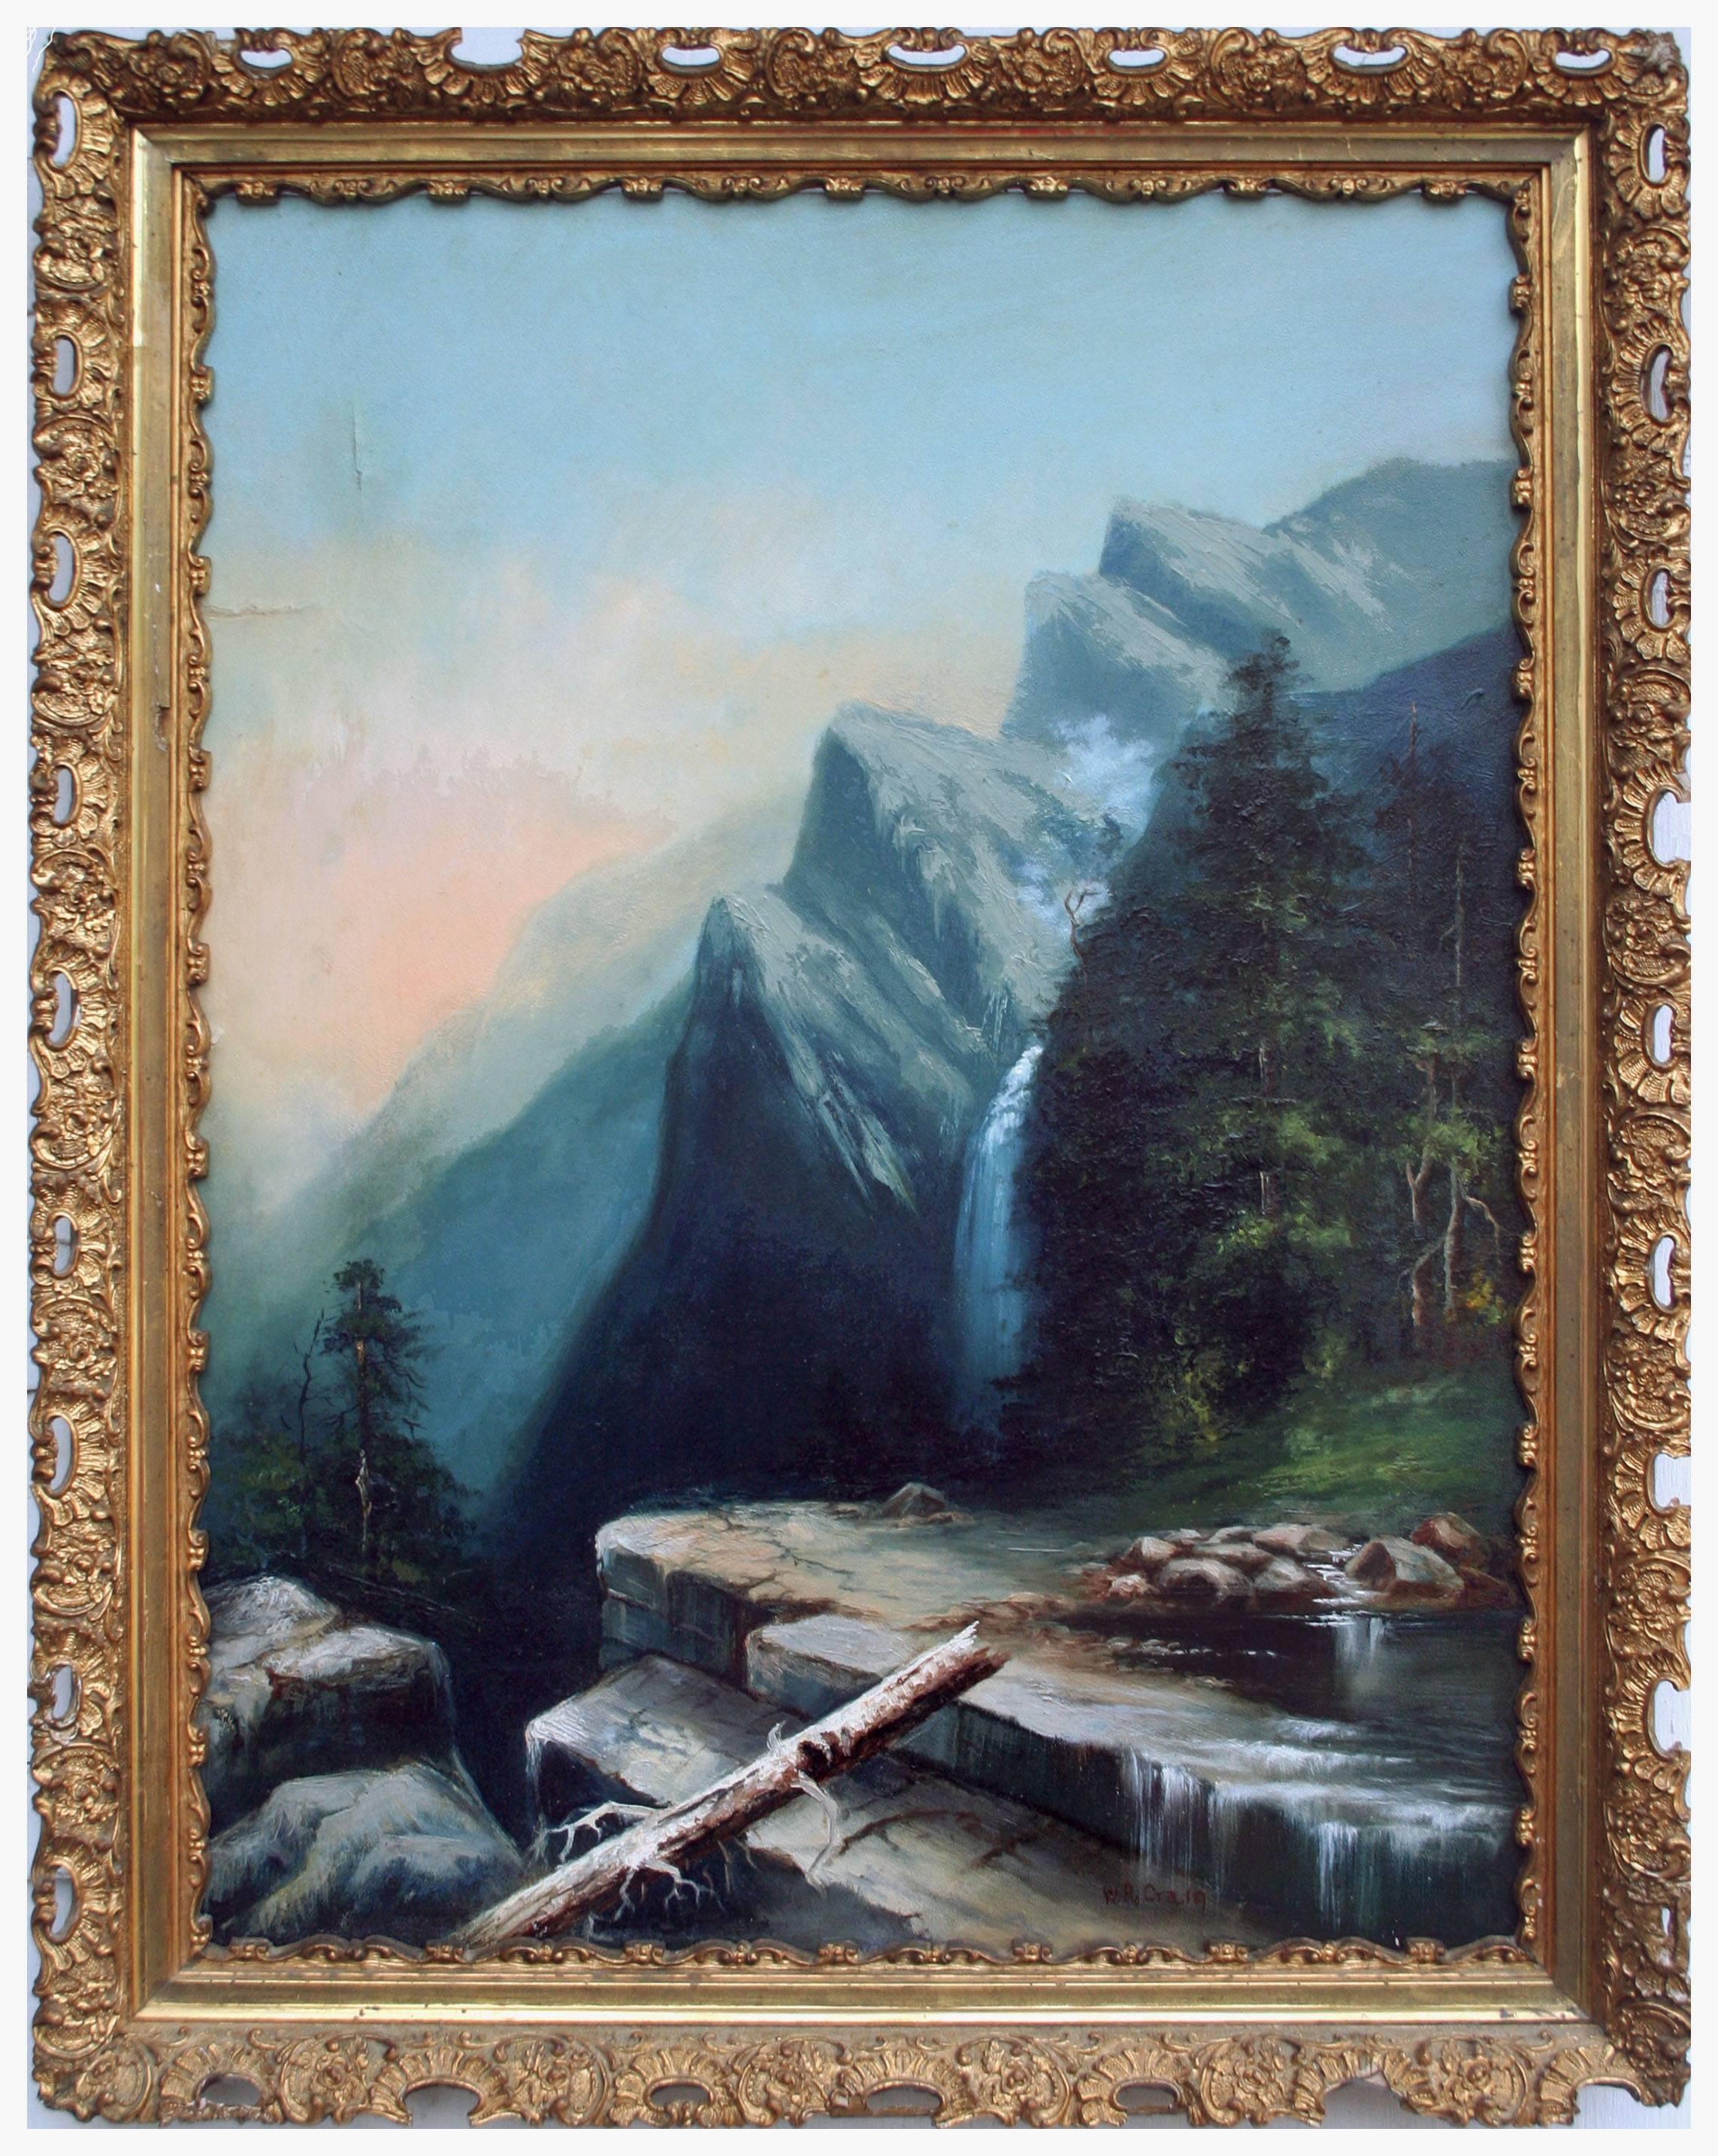 William Craig Landscape Painting - "Three Brothers" Mountain Peaks - Yosemite National Park, California Landscape 